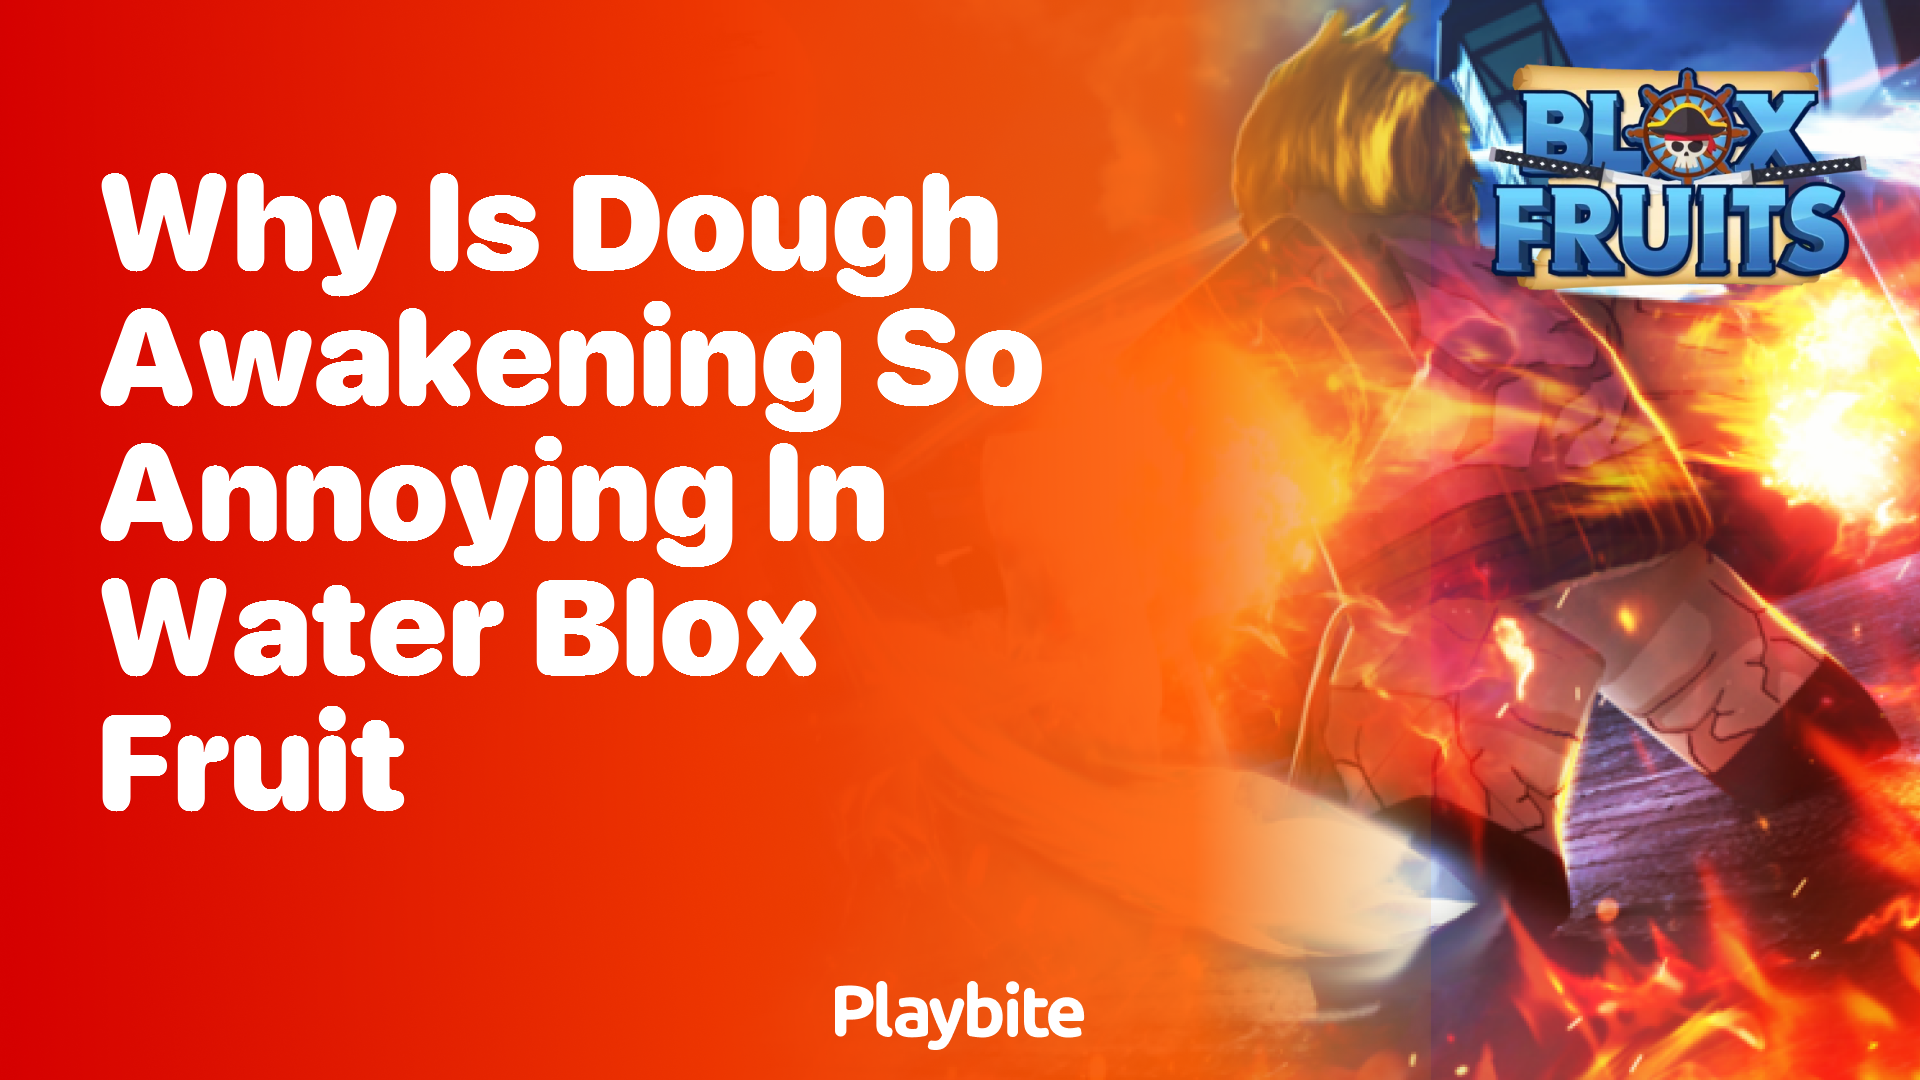 Why is Dough Awakening so Annoying in Water in Blox Fruit?